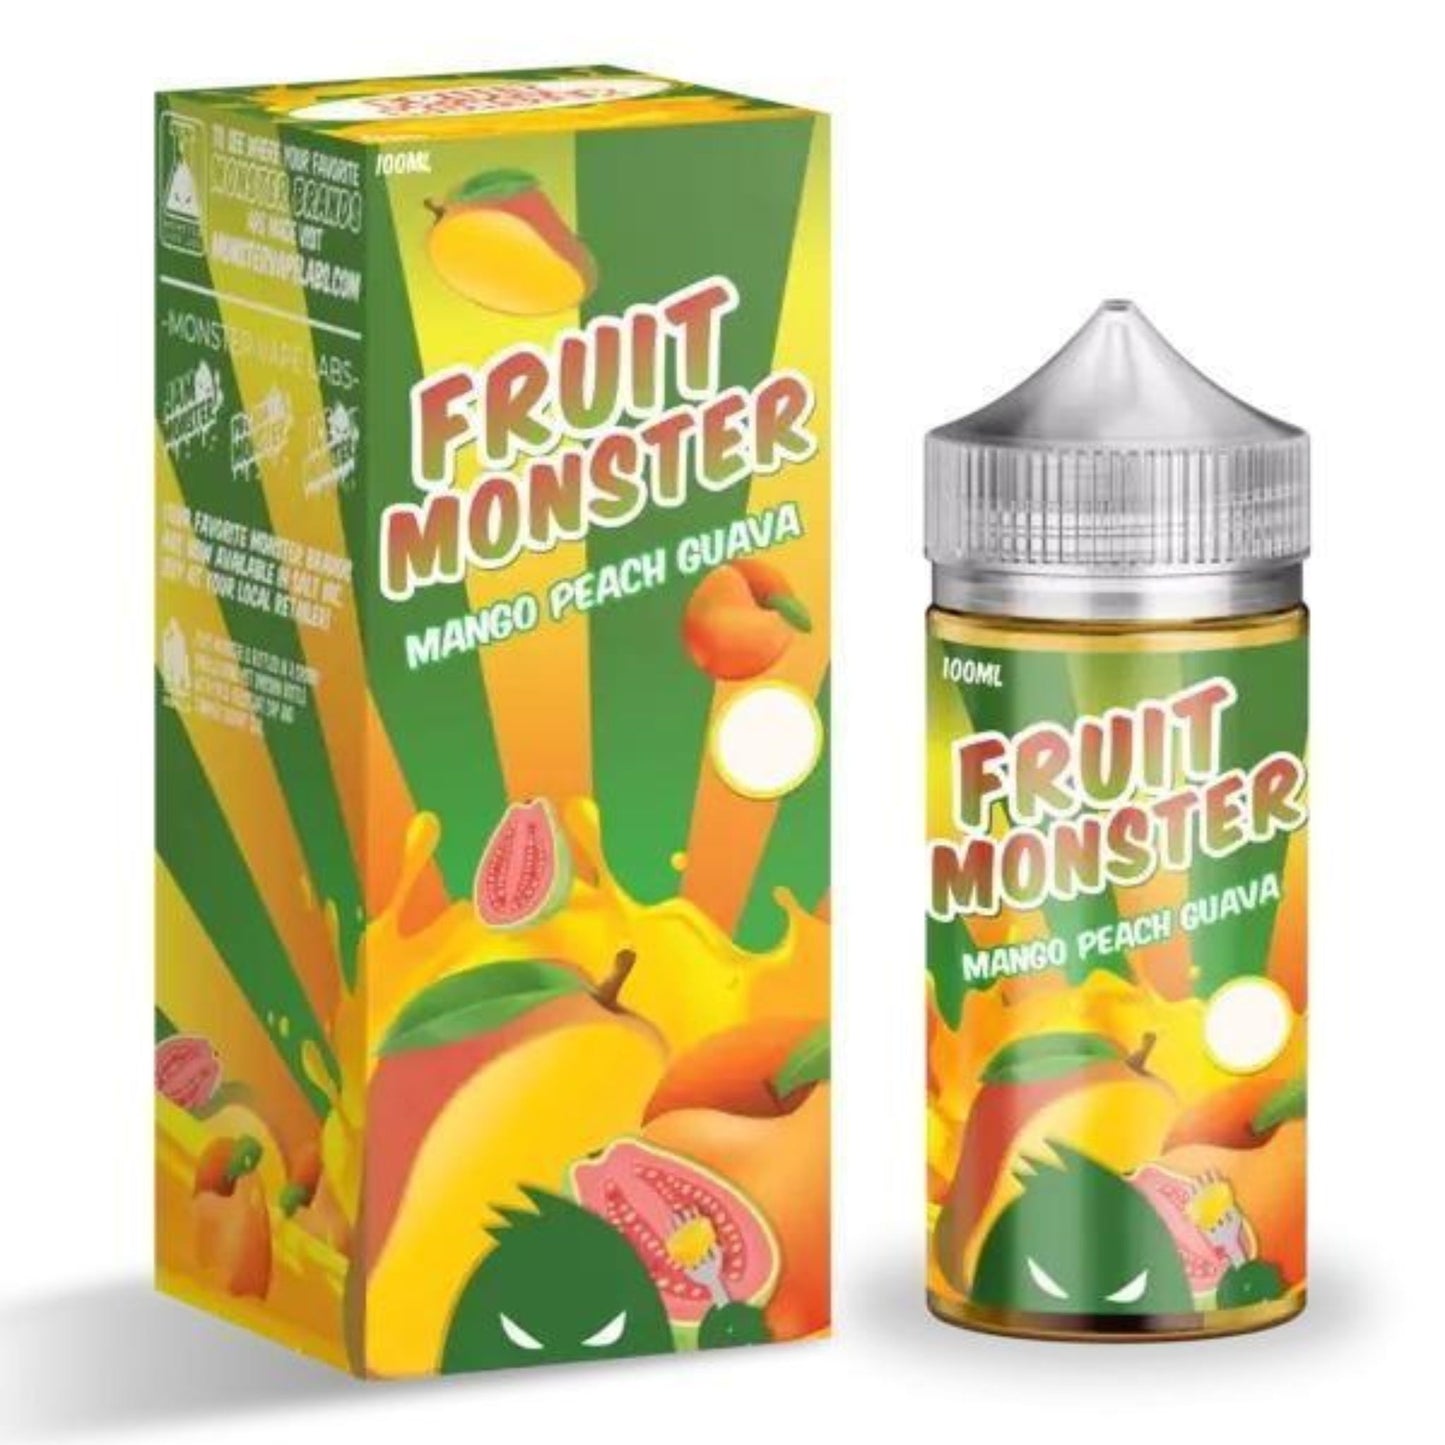 fruit monster mango peach guava 100ml bottle and box